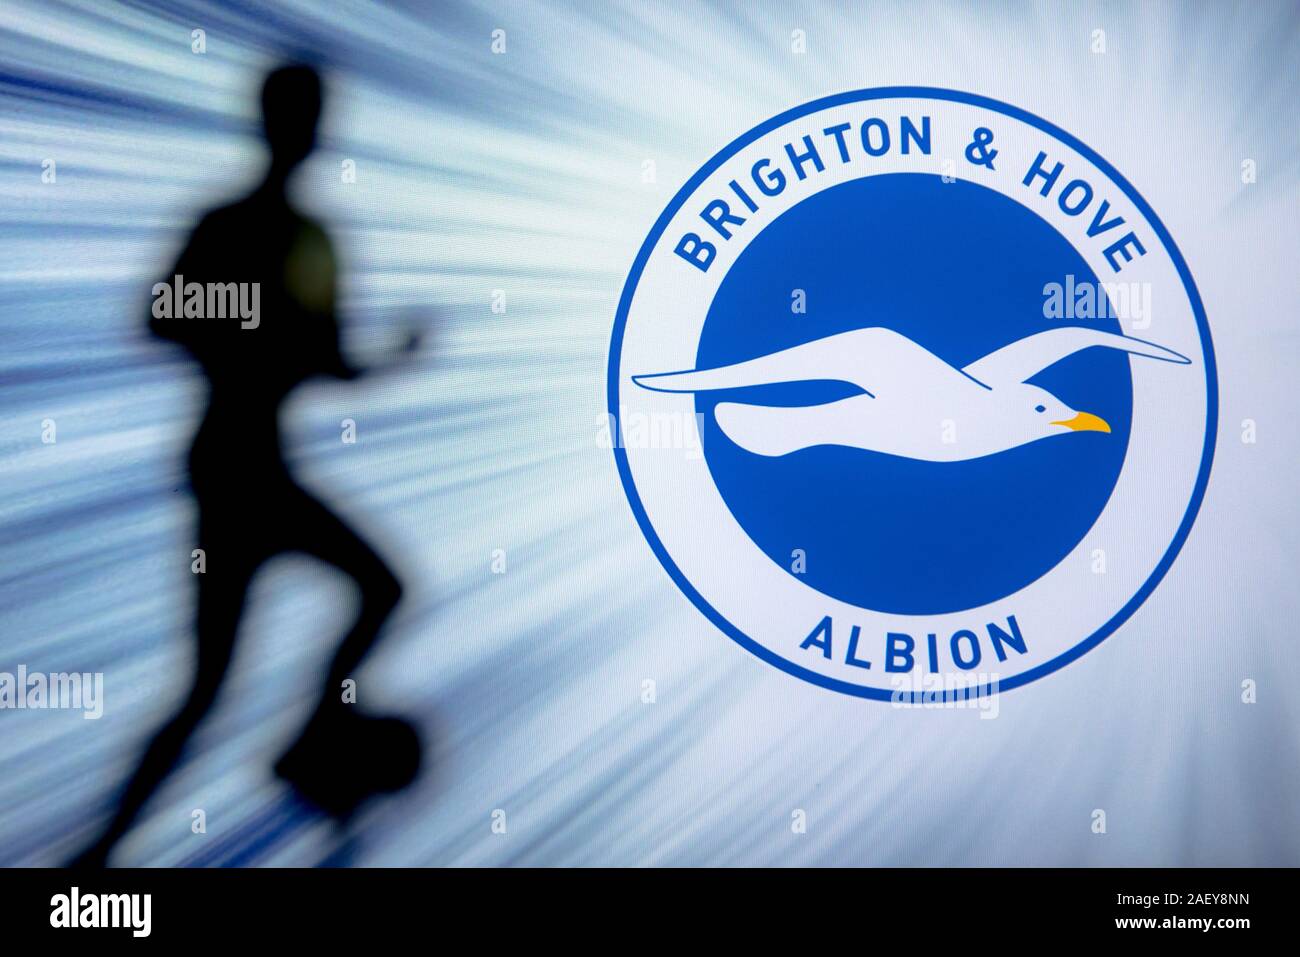 BRIGHTON, Angleterre, juillet. 1. 2019 : Brighton Hove Albion Football club logo, Premier League, Angleterre. Joueur de football d'ossature. Banque D'Images